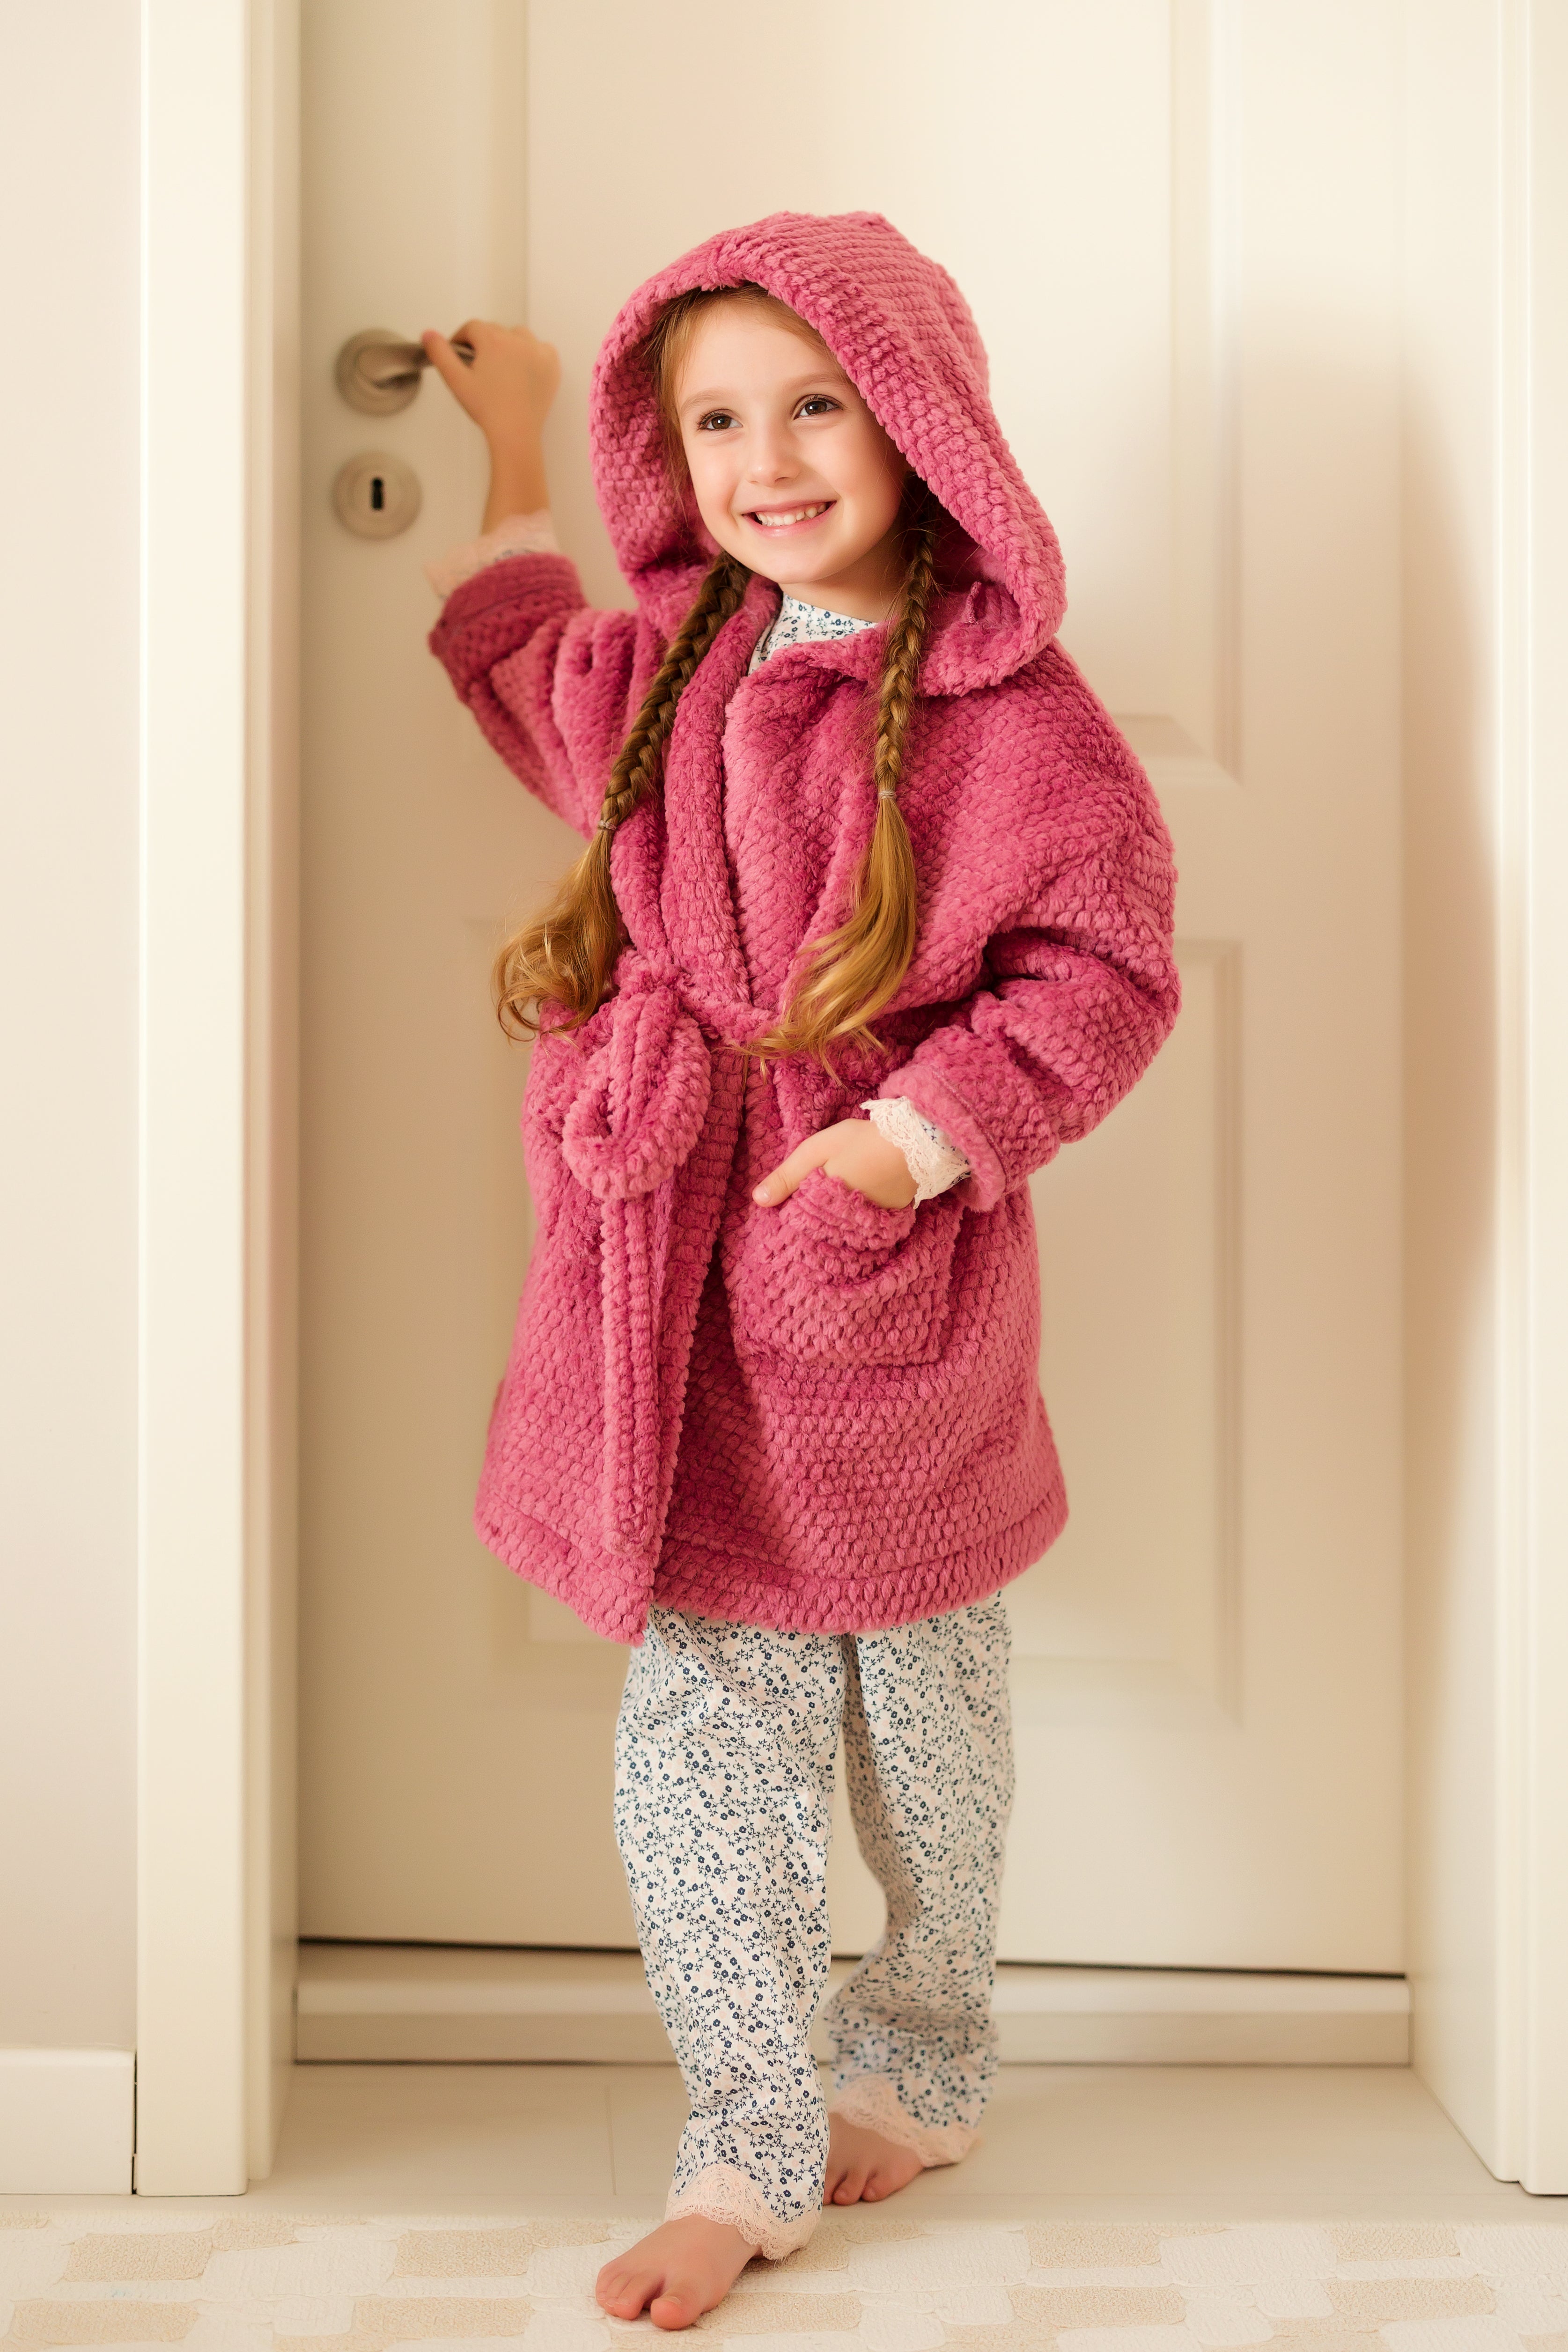 Buy MICHLEY Girls Boys Robe Cotton Towel Kids Animal Dinosaur Style Hooded  Bathrobe (Rose 3-5T) at Amazon.in